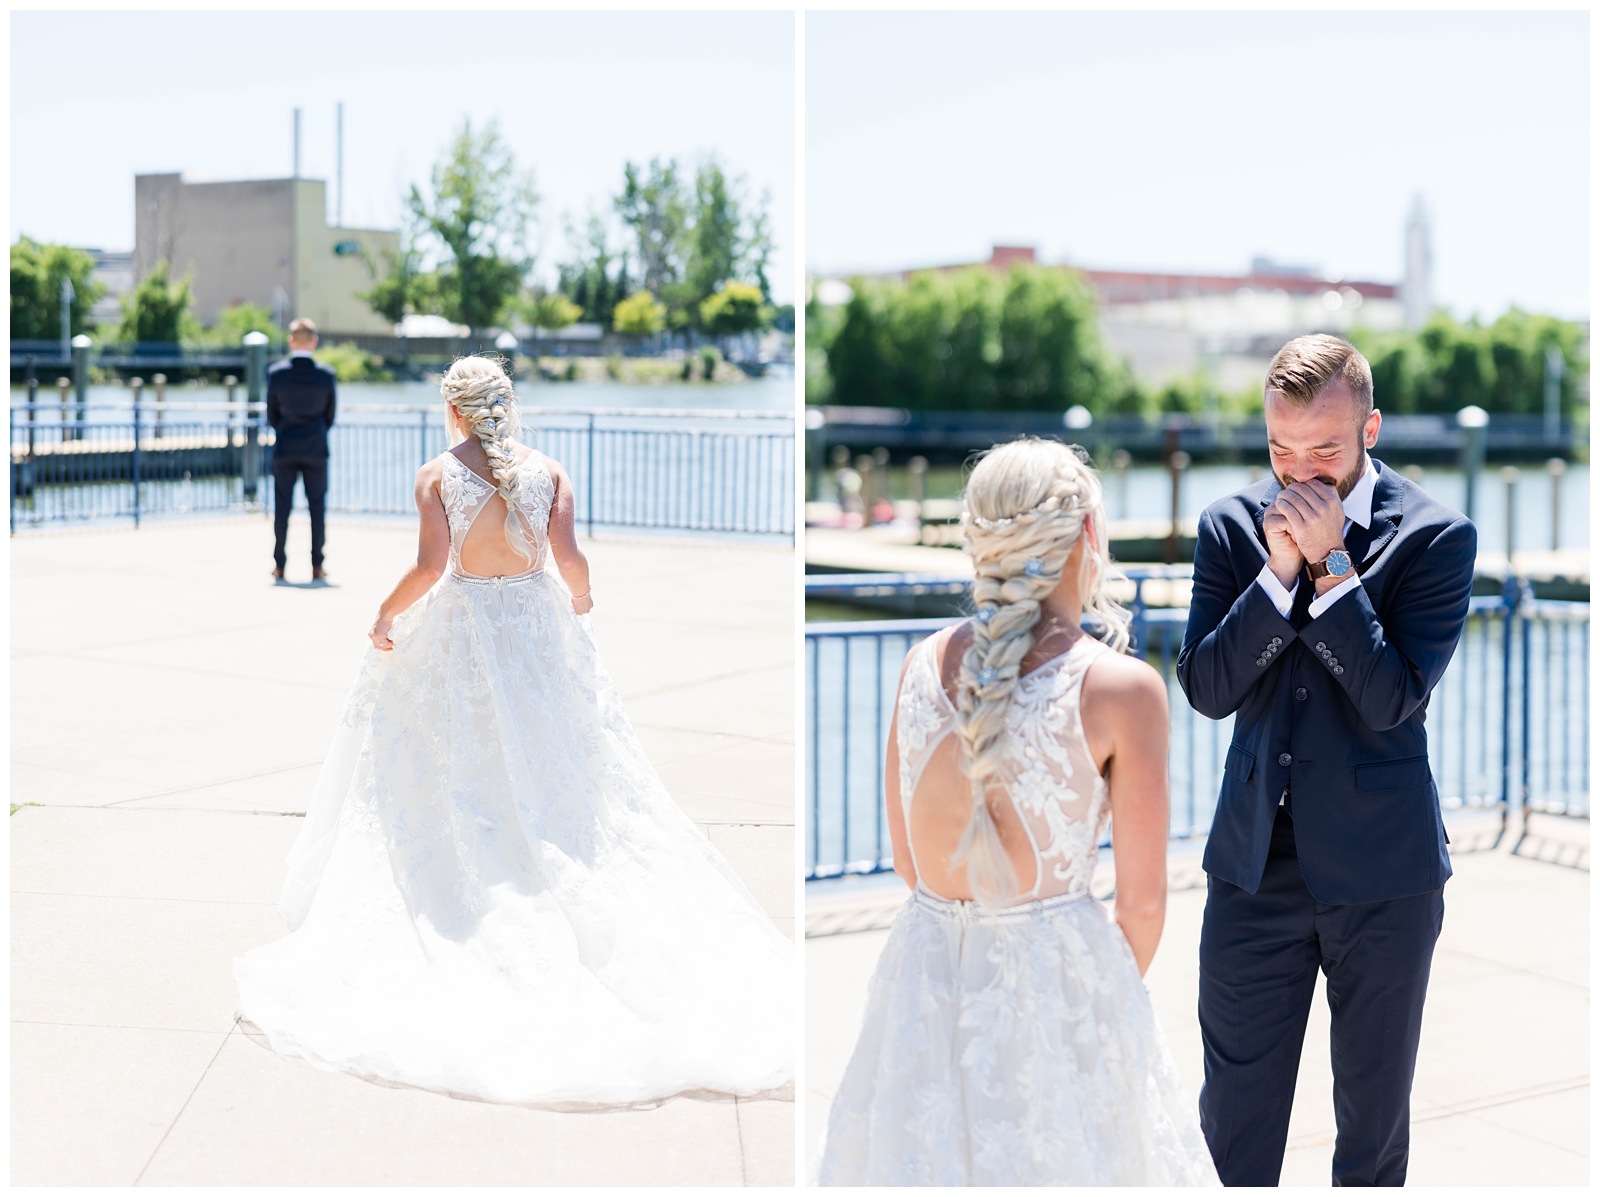 Emotional bride and groom first look